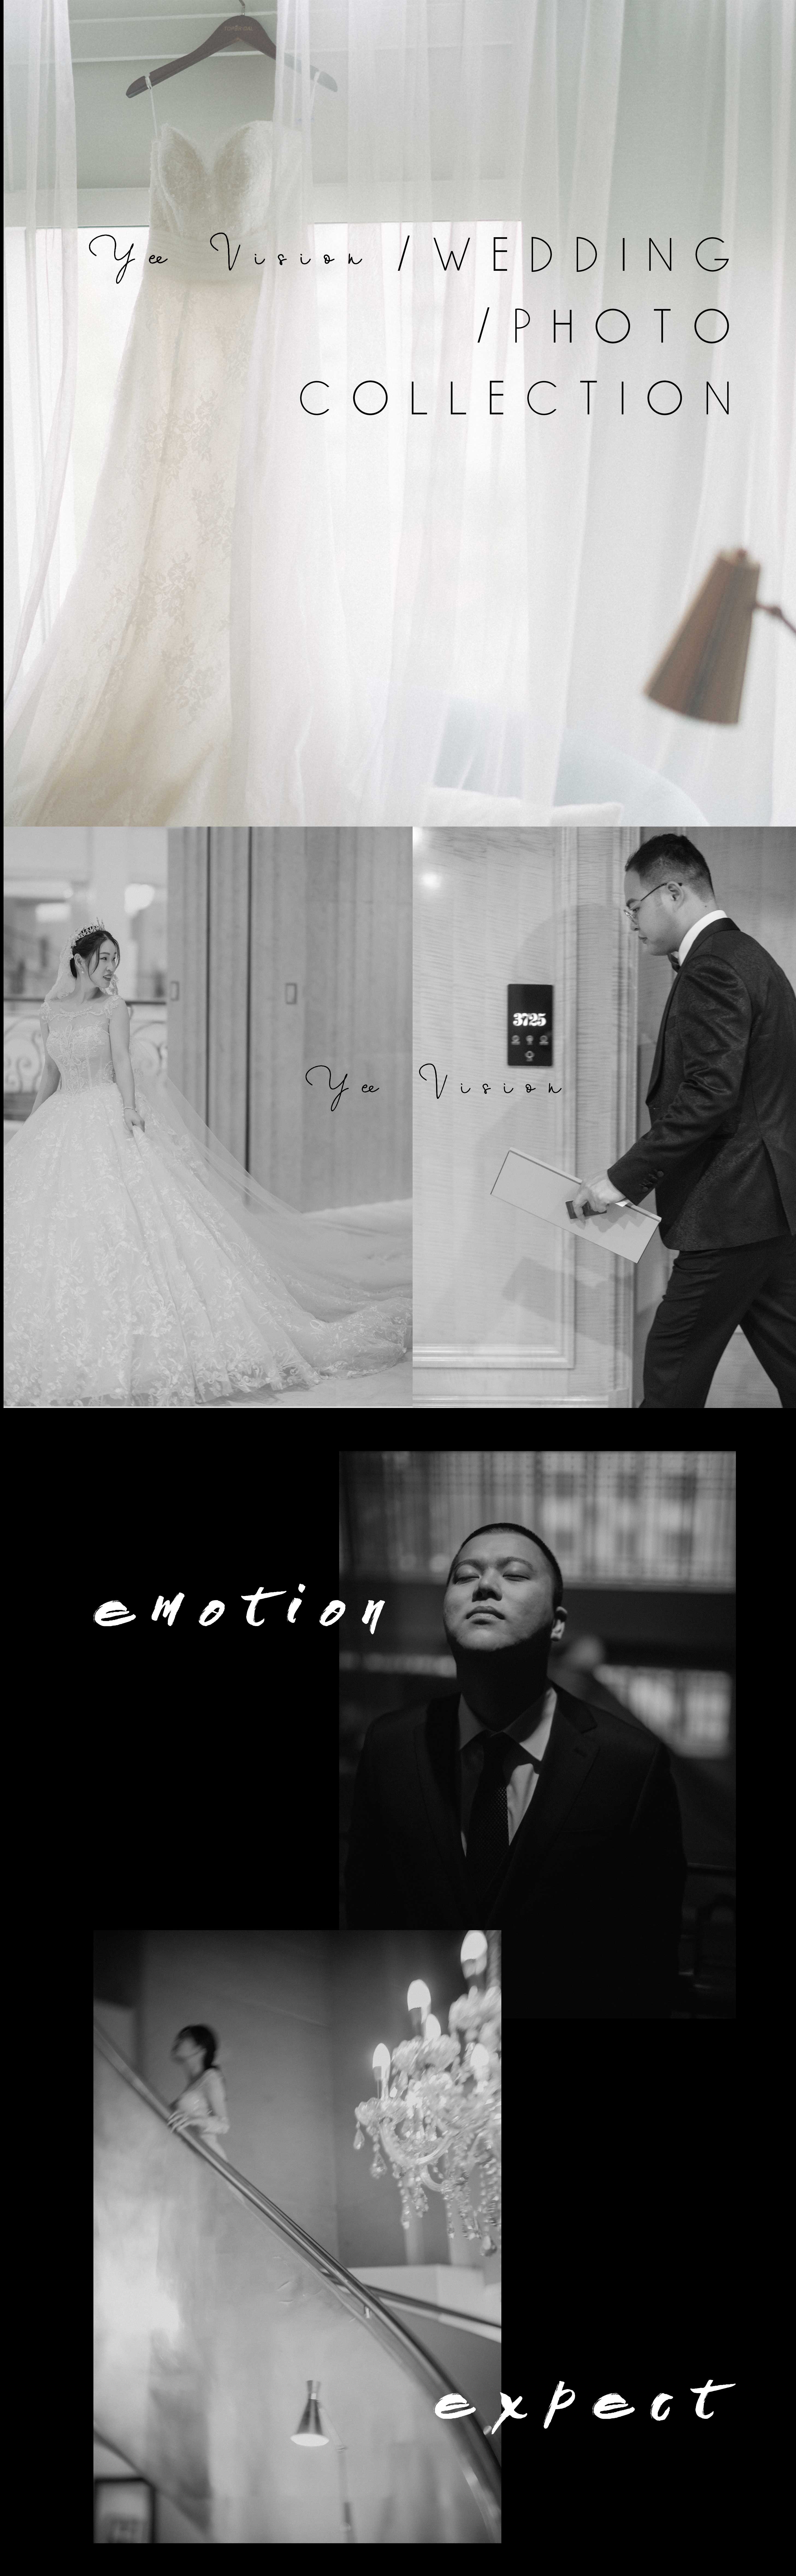 YeeVision婚礼摄影/双机